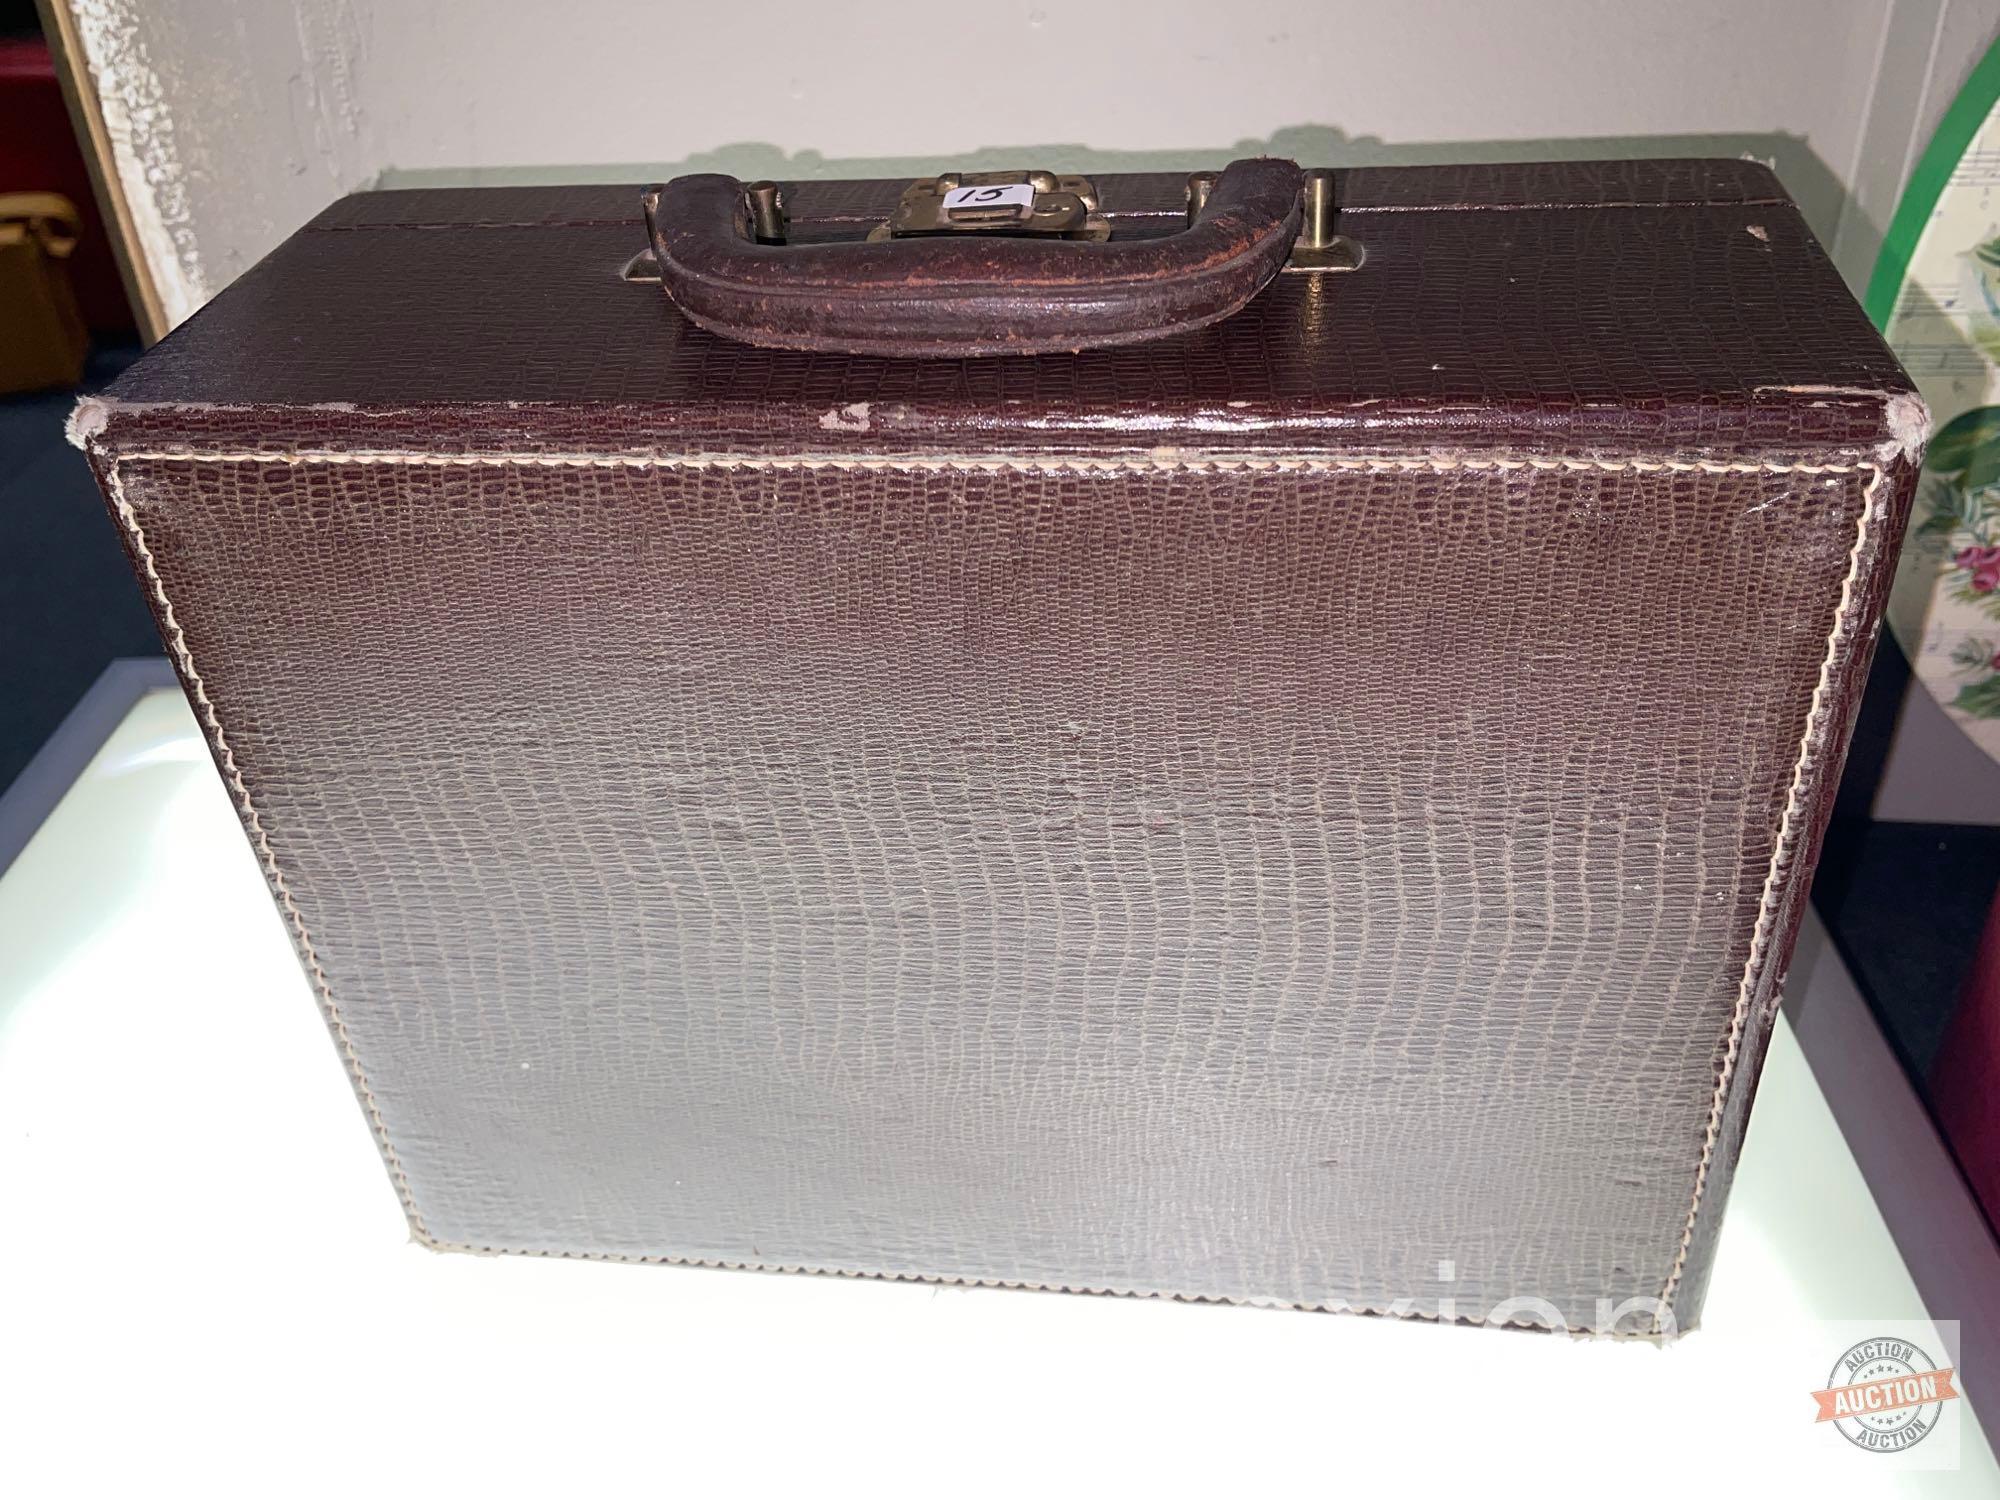 Vintage overnight case